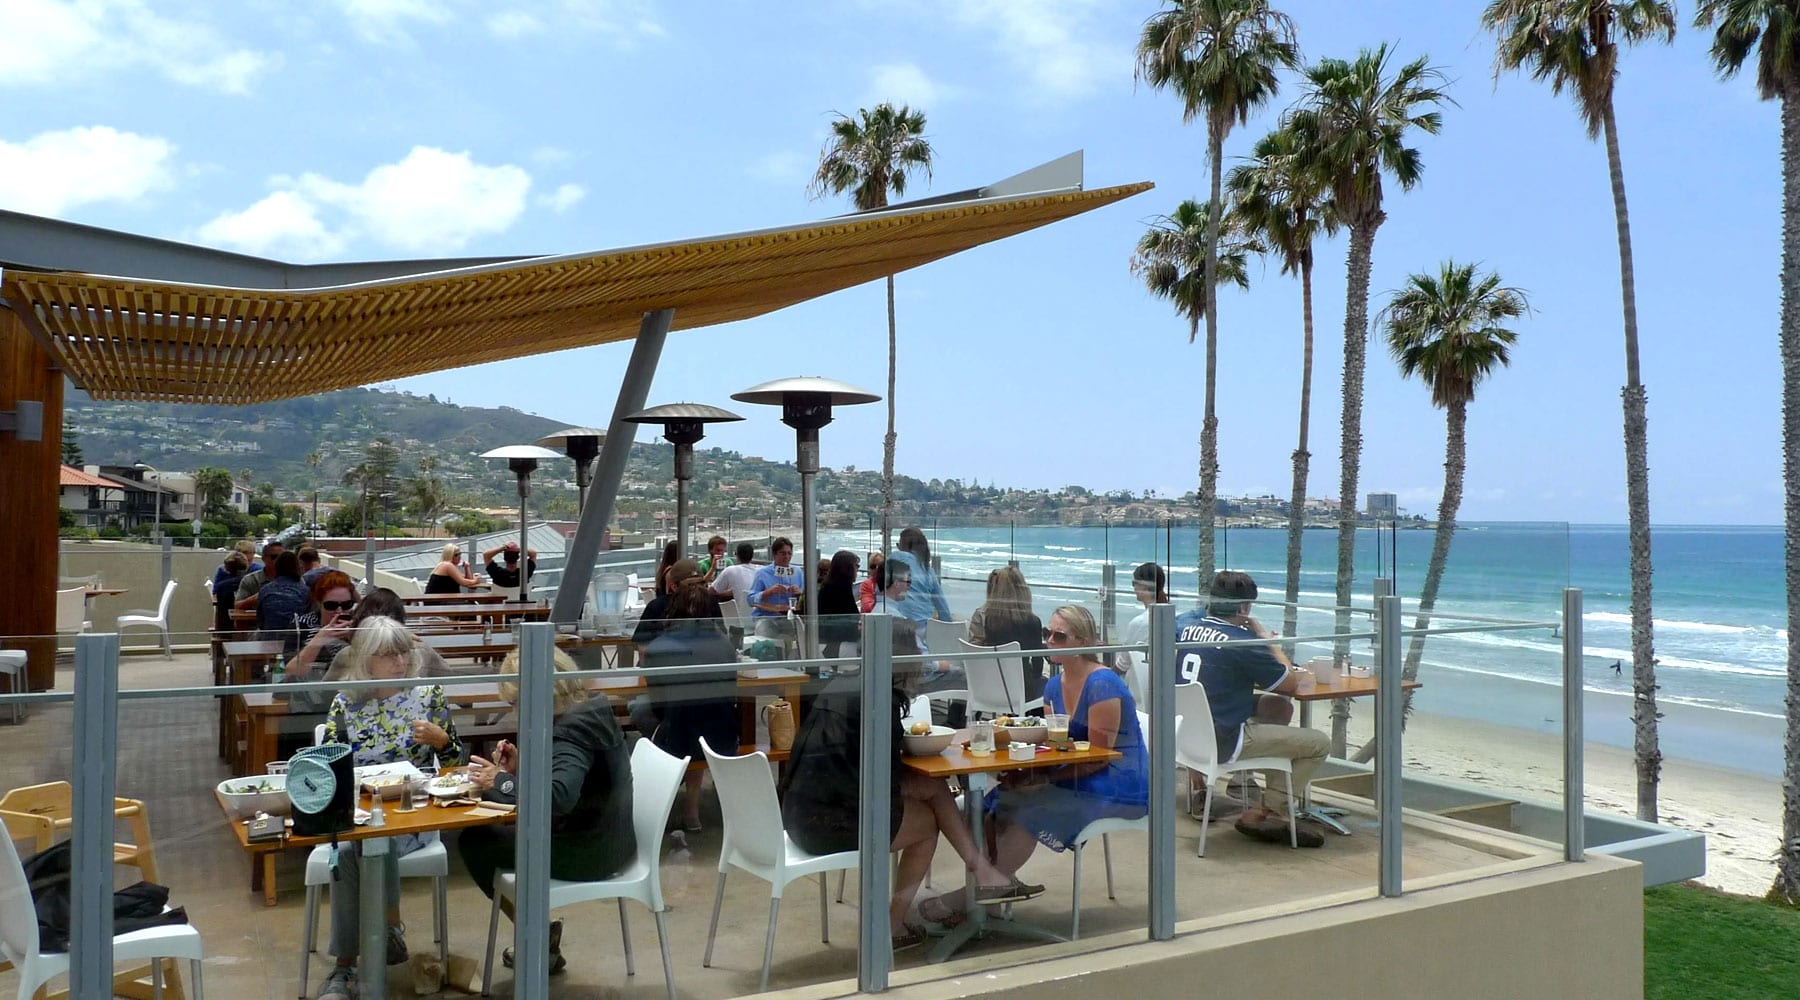 Caroline's Seaside Cafe – I Love San Diego